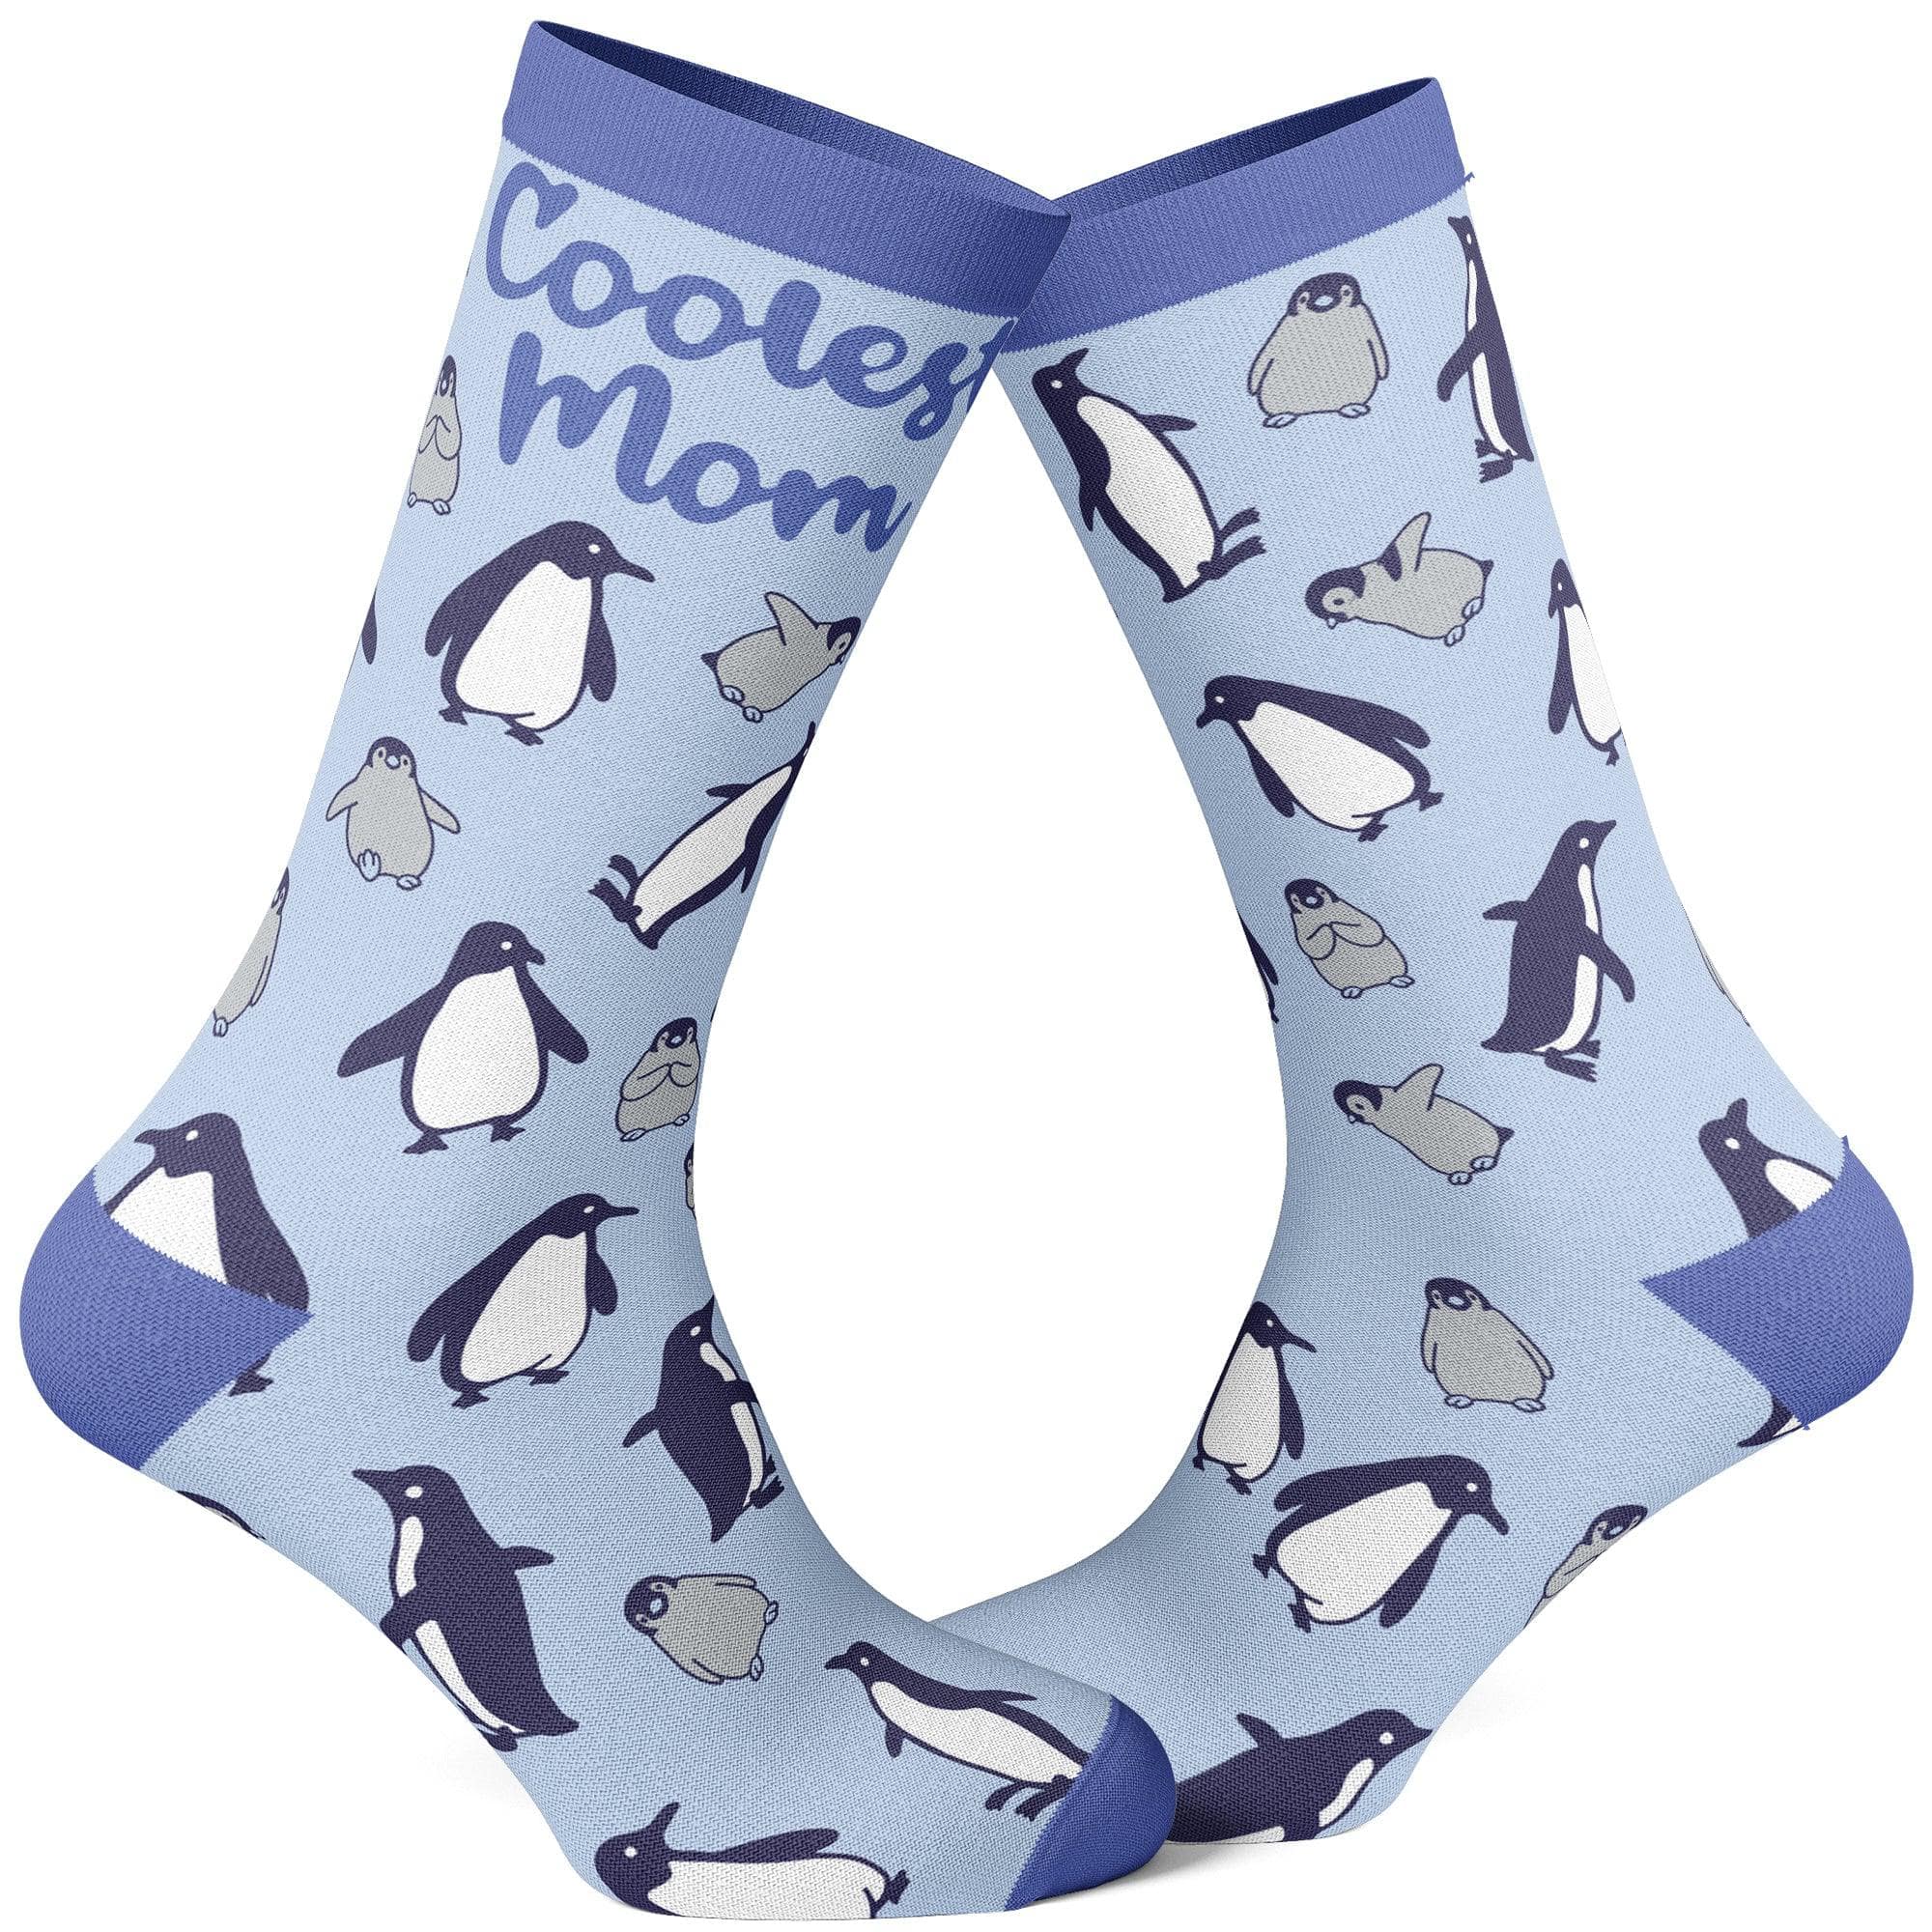 Women's Coolest Mom Penguins Socks  -  Crazy Dog T-Shirts